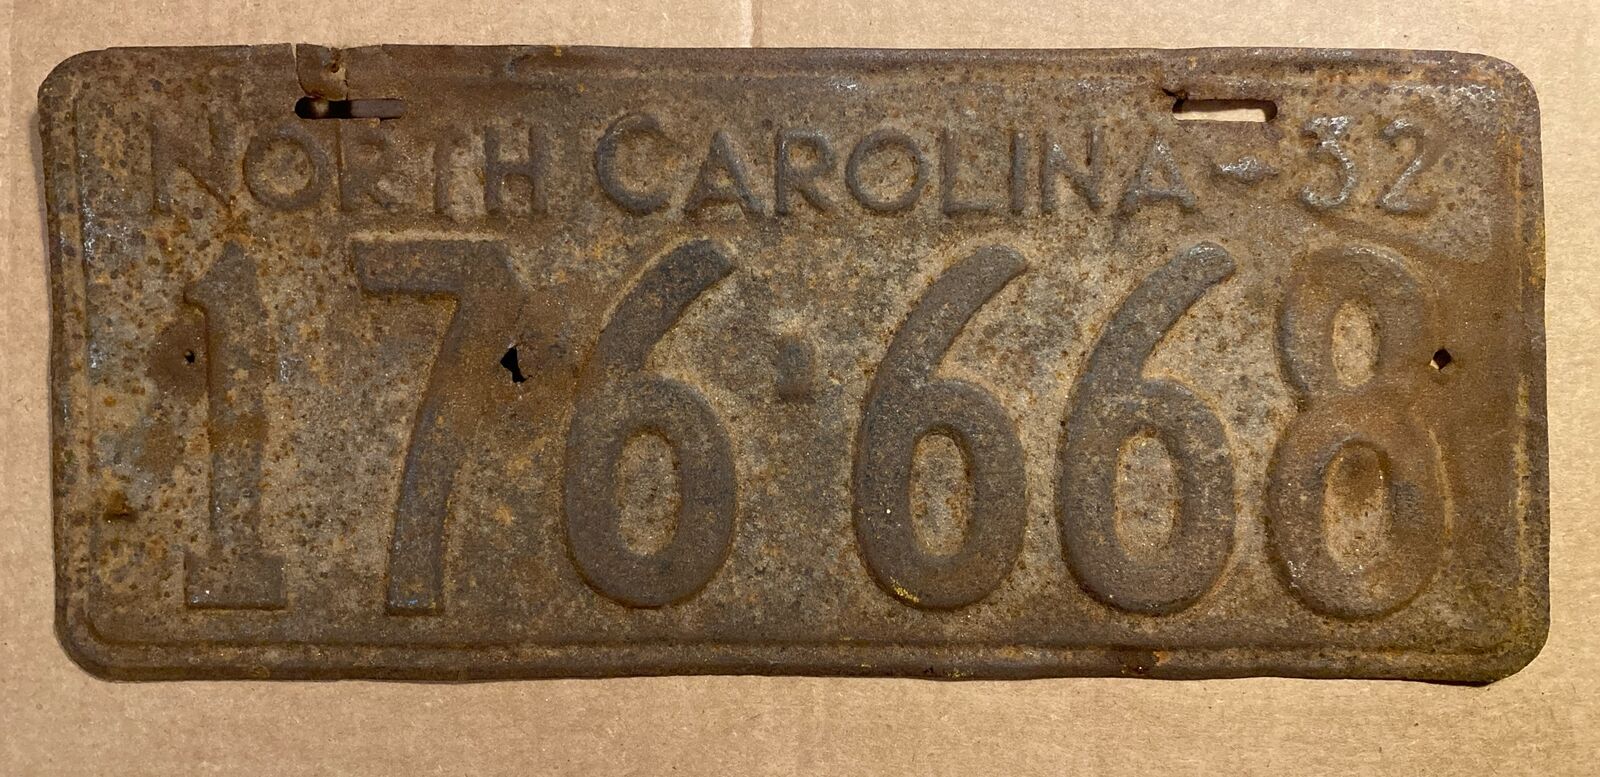 1932 North Carolina license plate, original needs repaint